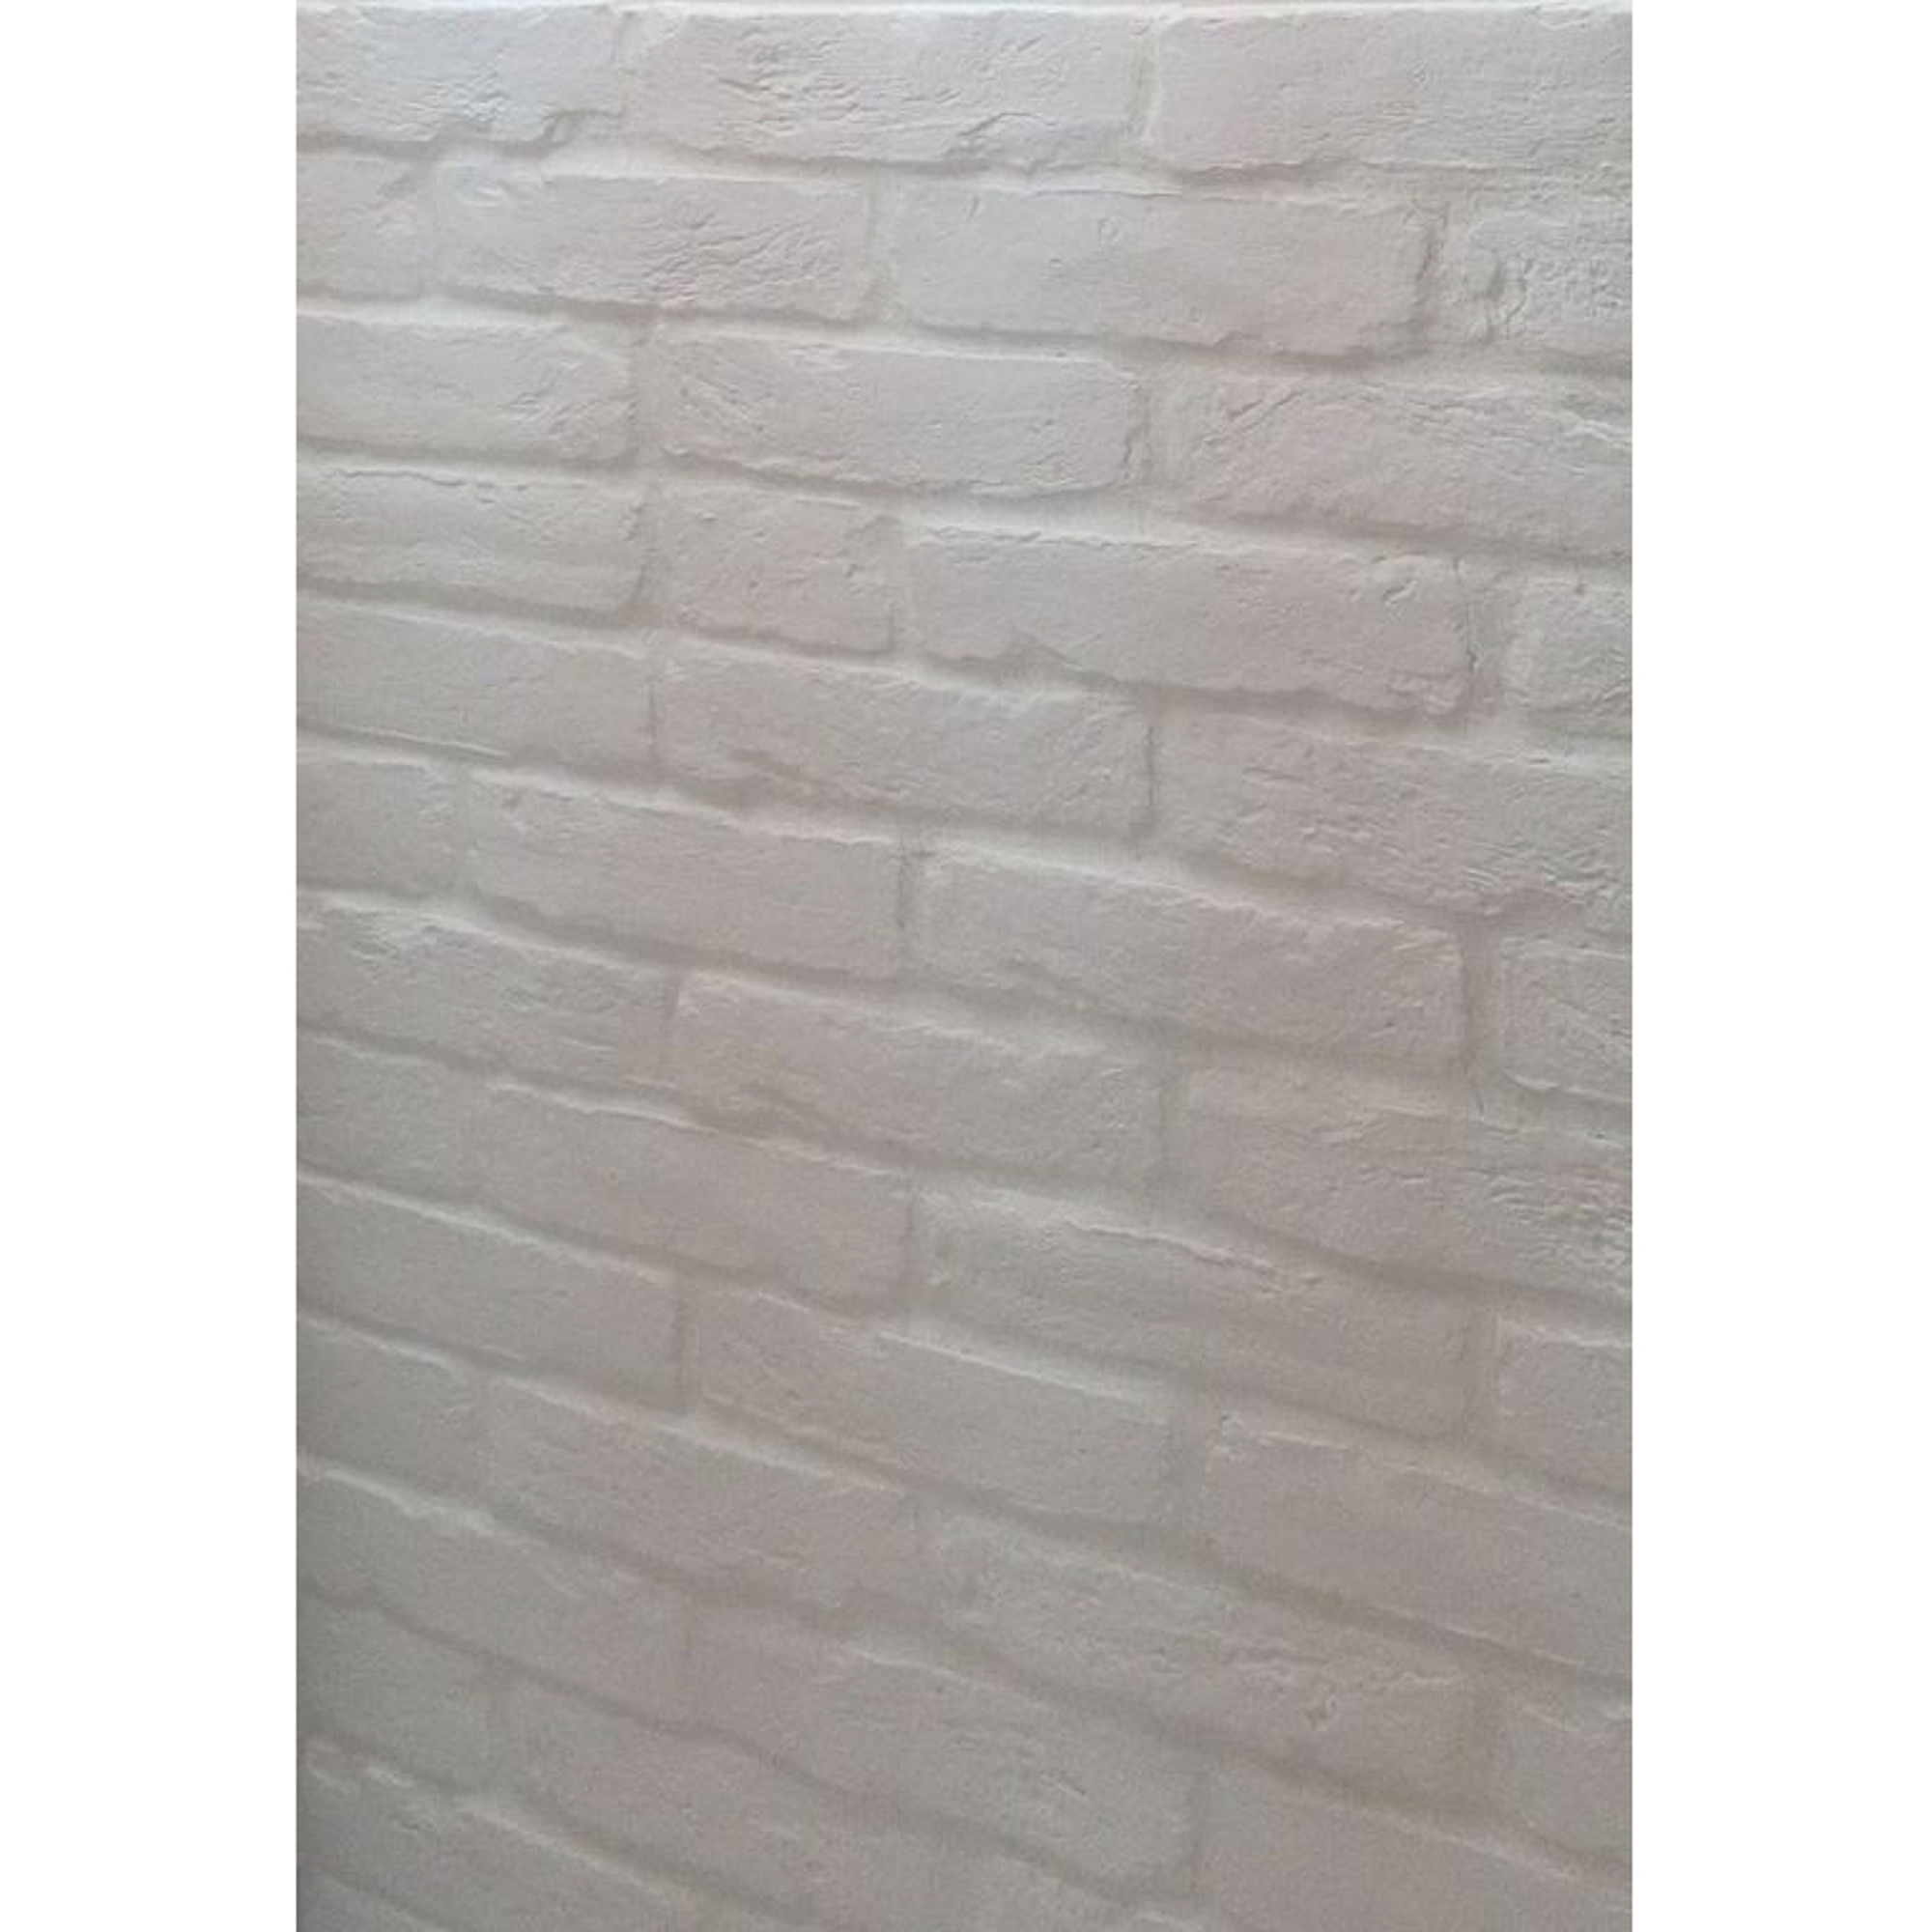 Плитка Керамика Императорский кирпич Белый Тычок 12,8х7,6 см плитка керамика старинная мануфактура xviii века тычок белый 13x7 см